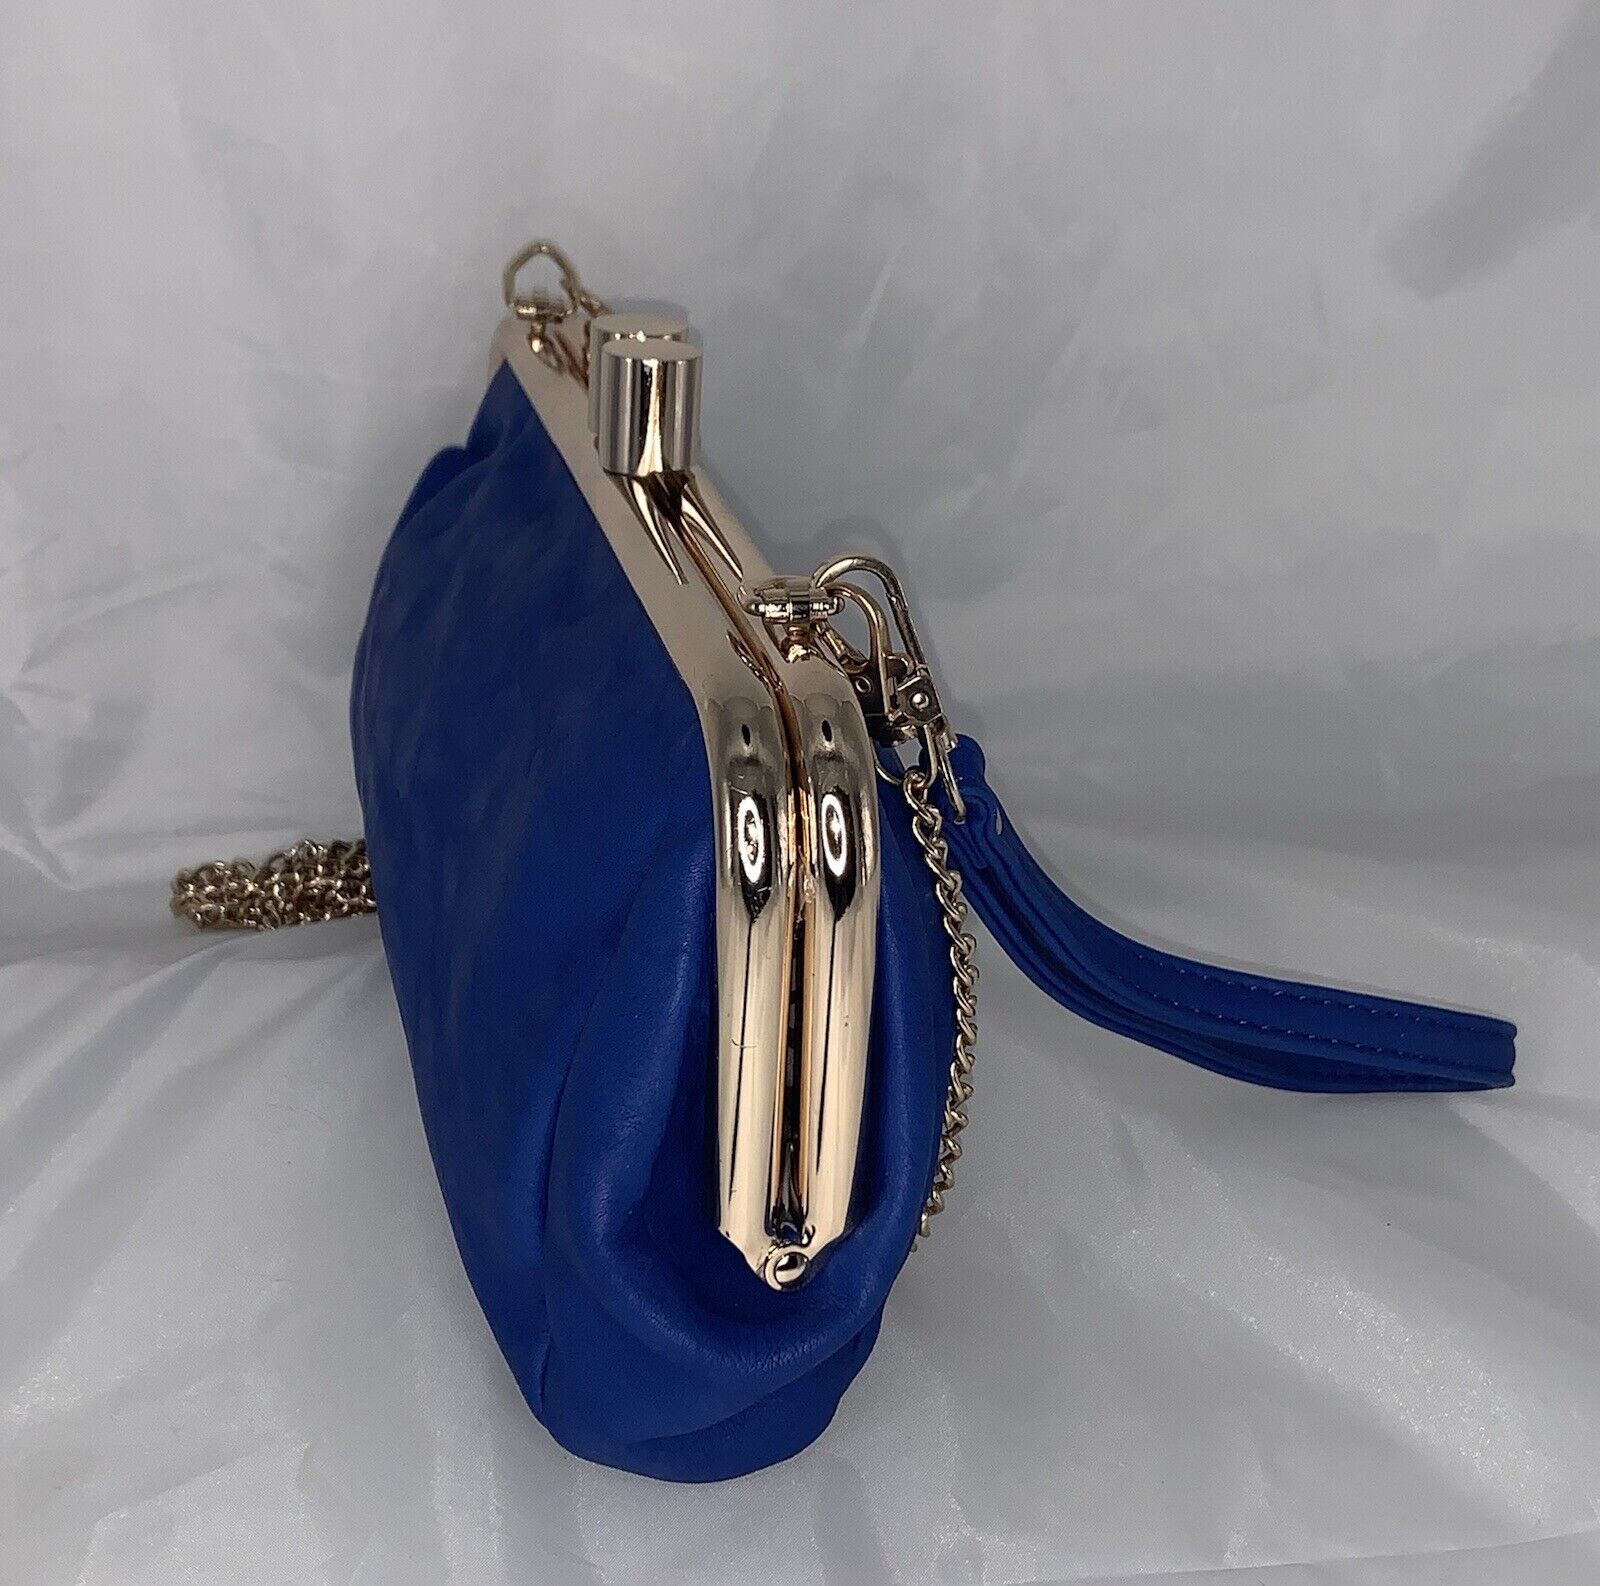 Navy/Royal Blue Faux Leather Clutch Evening Handbag w/Chain Shoulder Strap